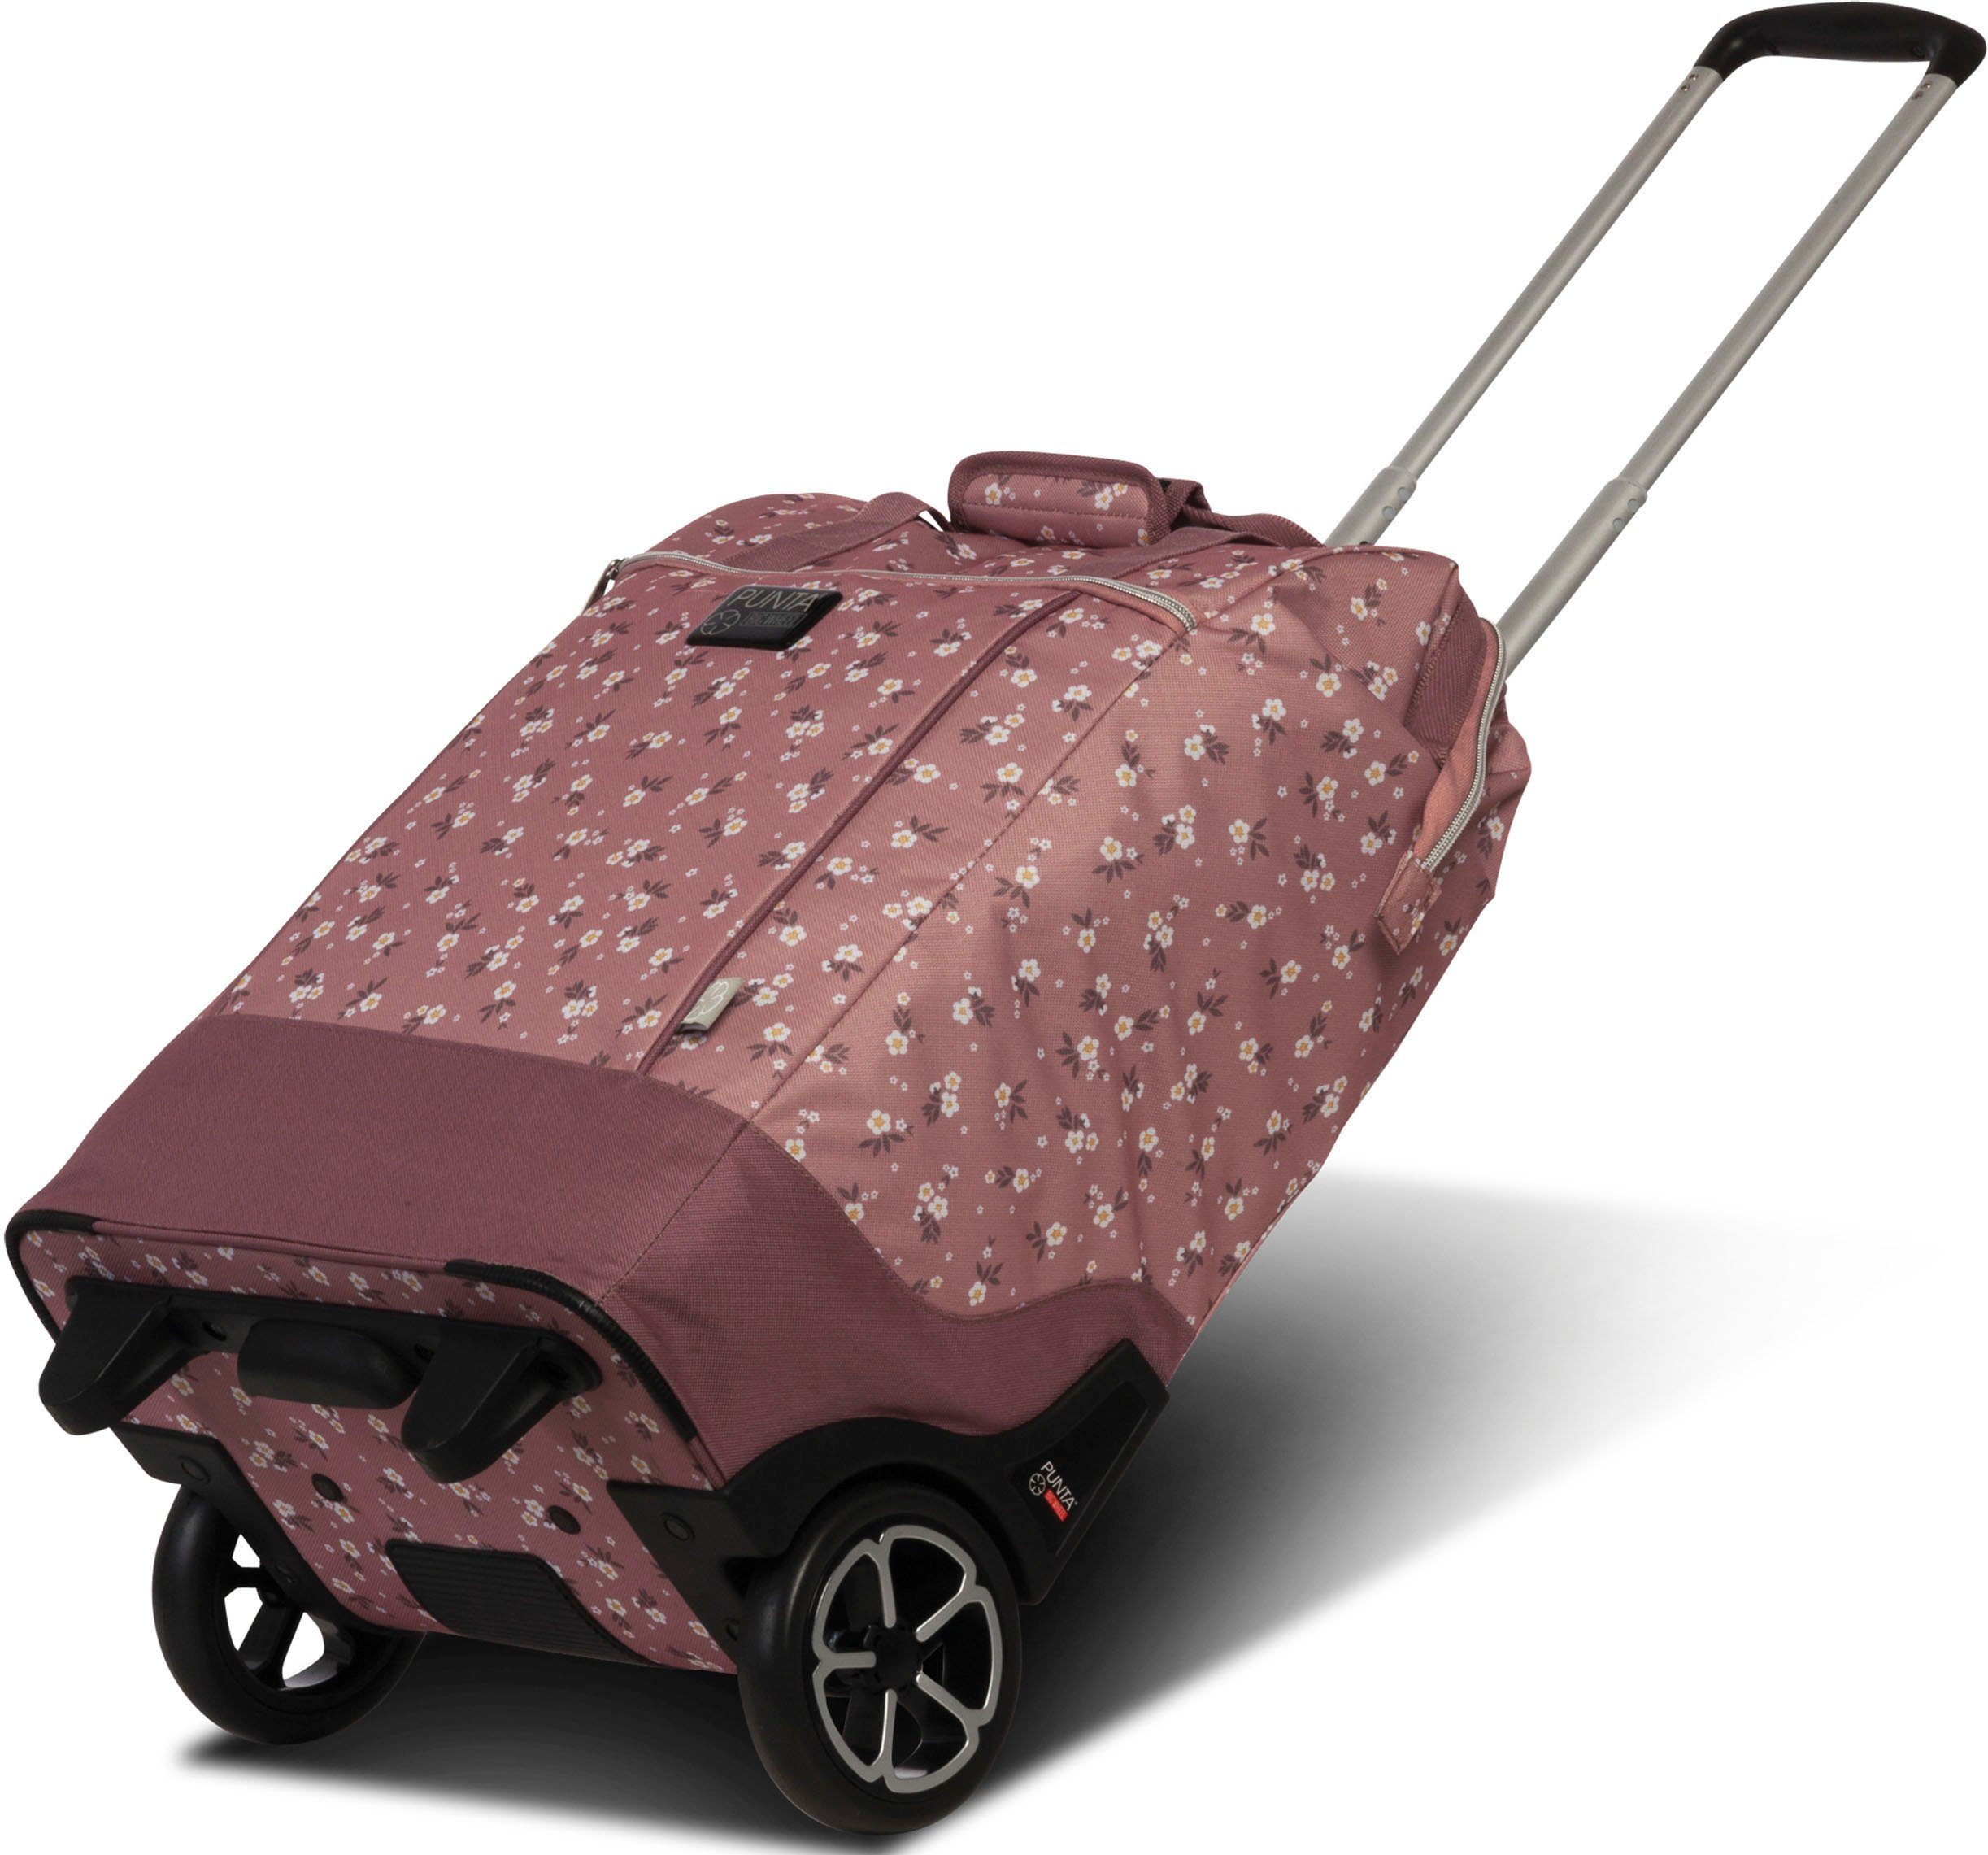 l, fabrizio® extra 40 Räder, Muster rosa Punta-Big-Wheel-Shopping-Roller, Einkaufstrolley große